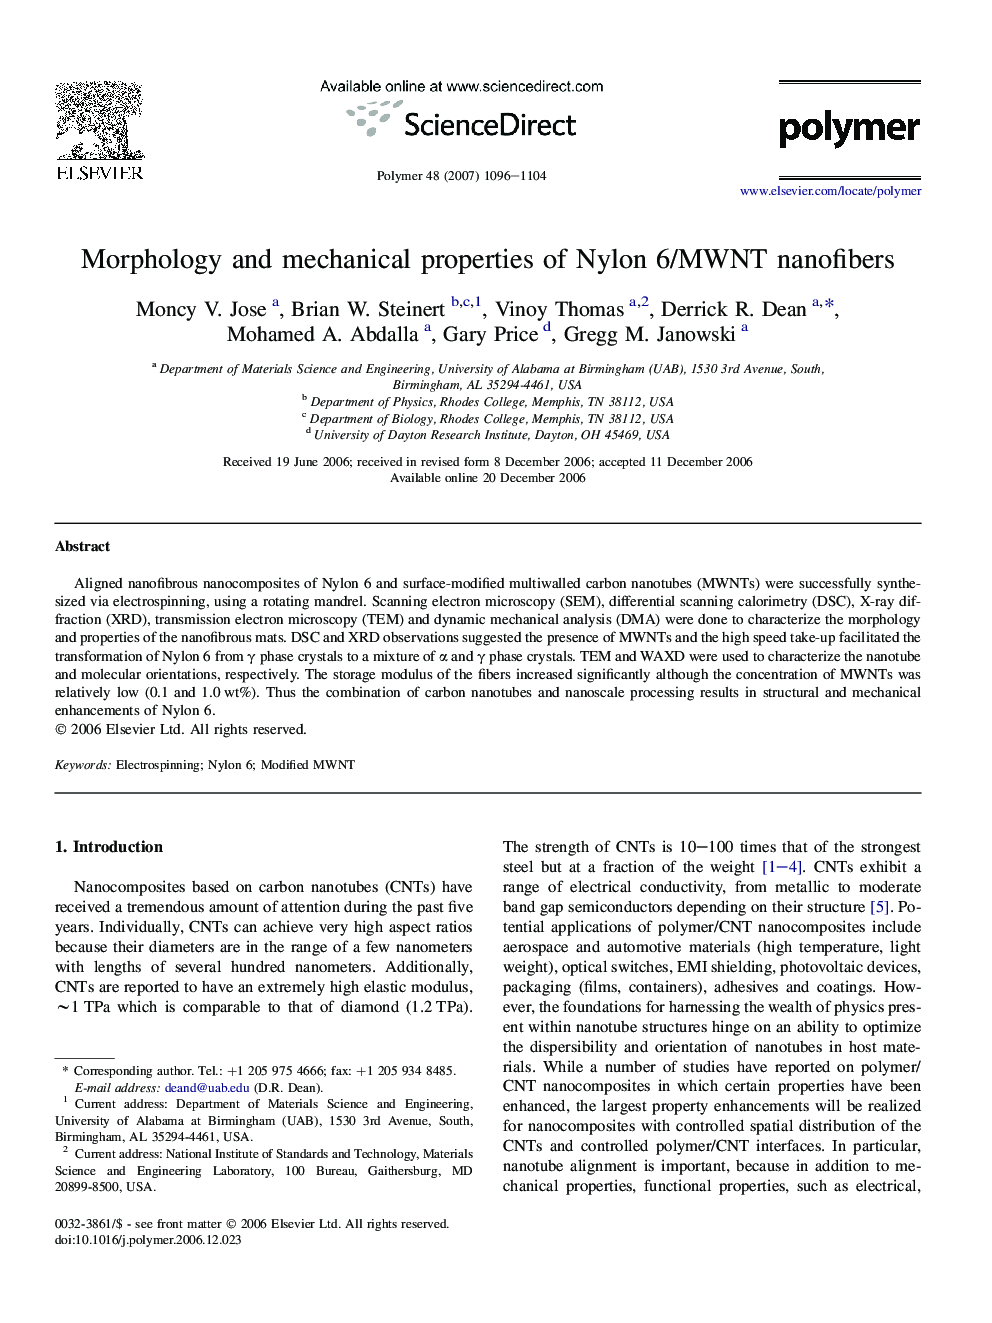 Morphology and mechanical properties of Nylon 6/MWNT nanofibers